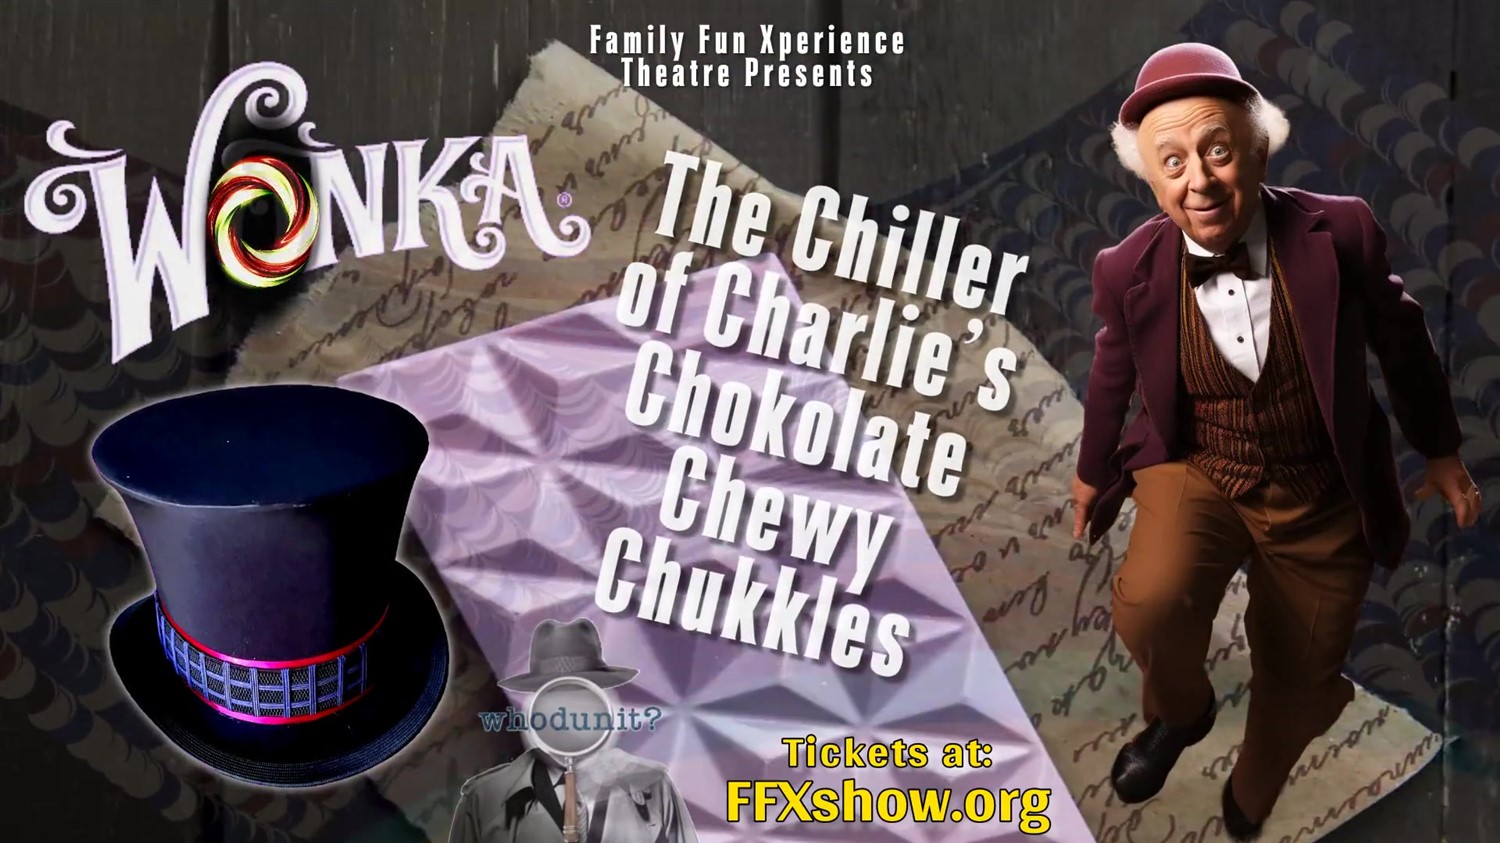 WHODUNIT? Charlie's Chukkles A Wonka-riffic Family-friendly Murder Mystery + Game Show on mar. 29, 19:00@FFX Theatre - Compra entradas y obtén información enFamily Fun Xperience tickets.ffxshow.org